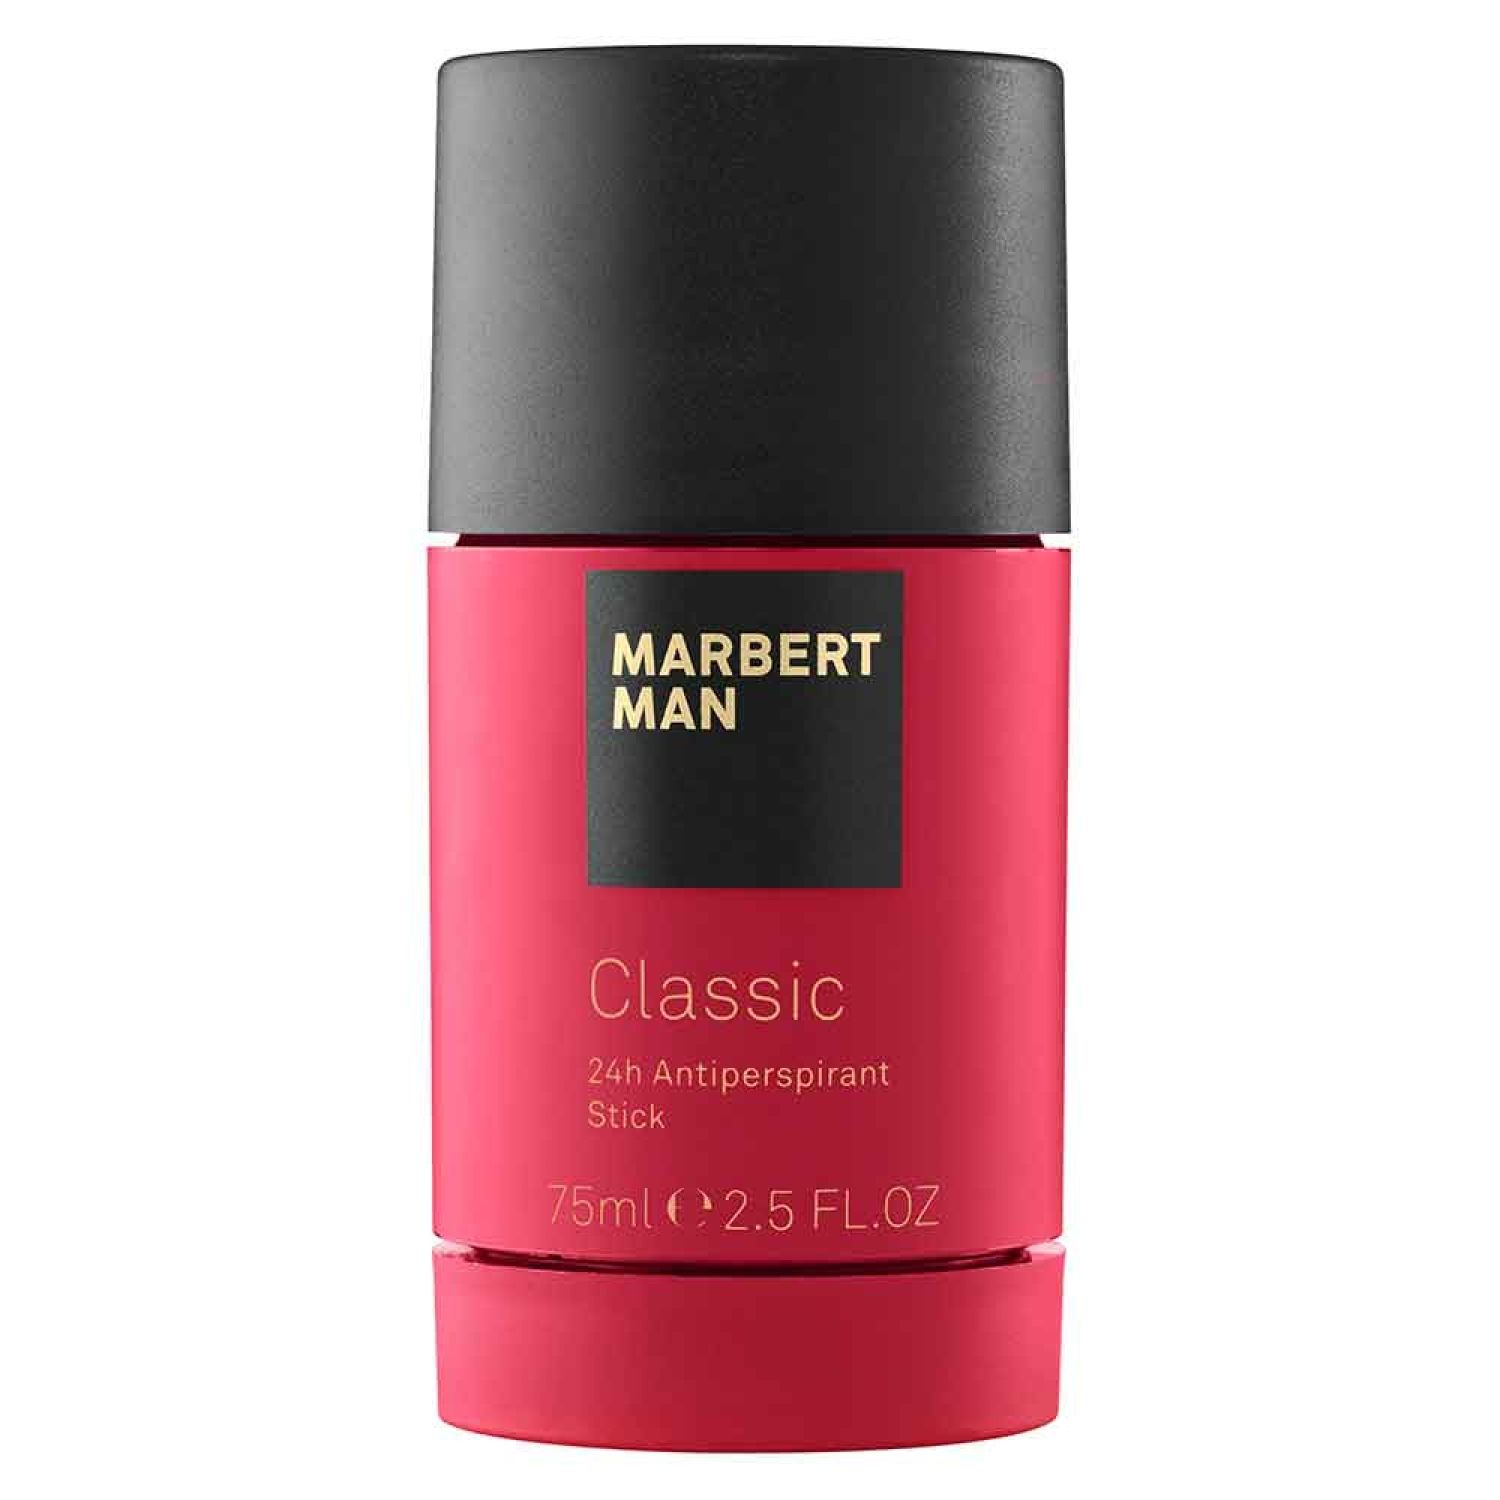 Marbert Man Classic 24h Anti-Perspirant Stick